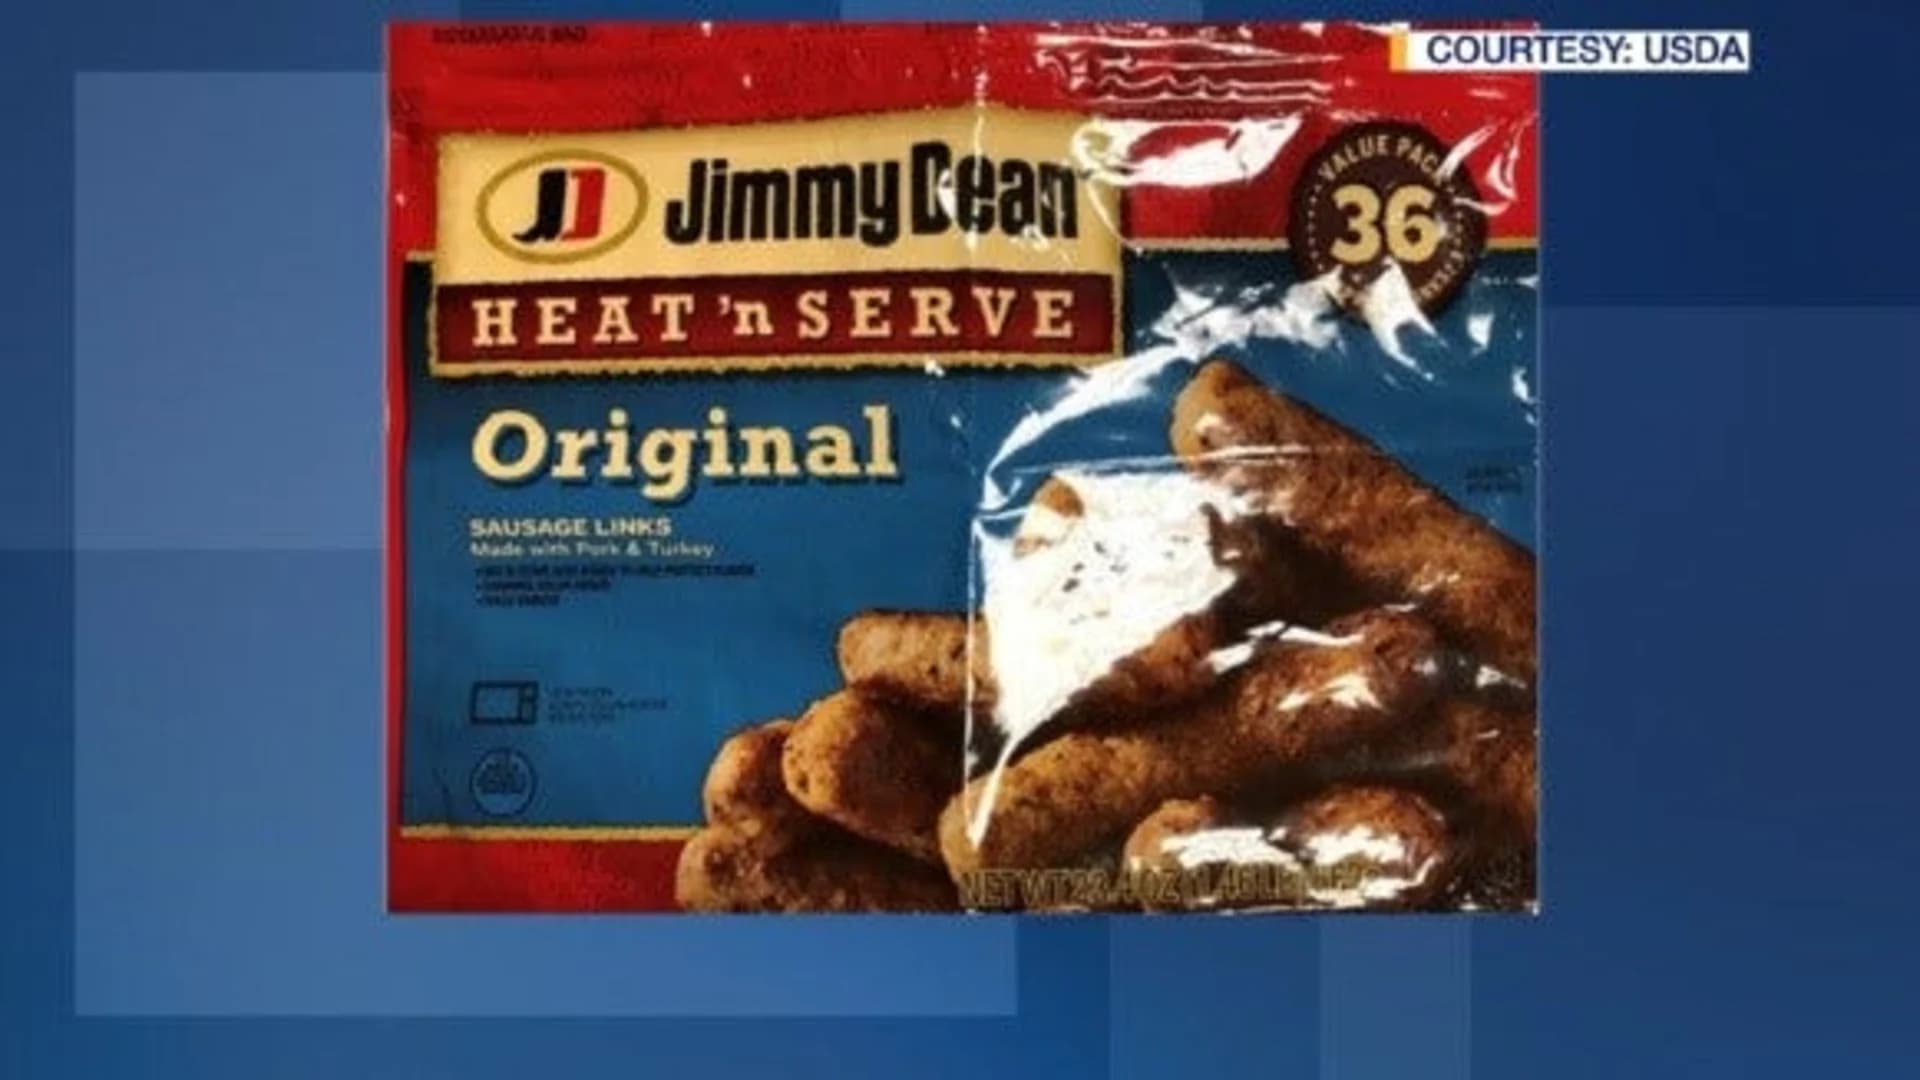 Over 29K pounds of sausage links recalled over metal concerns